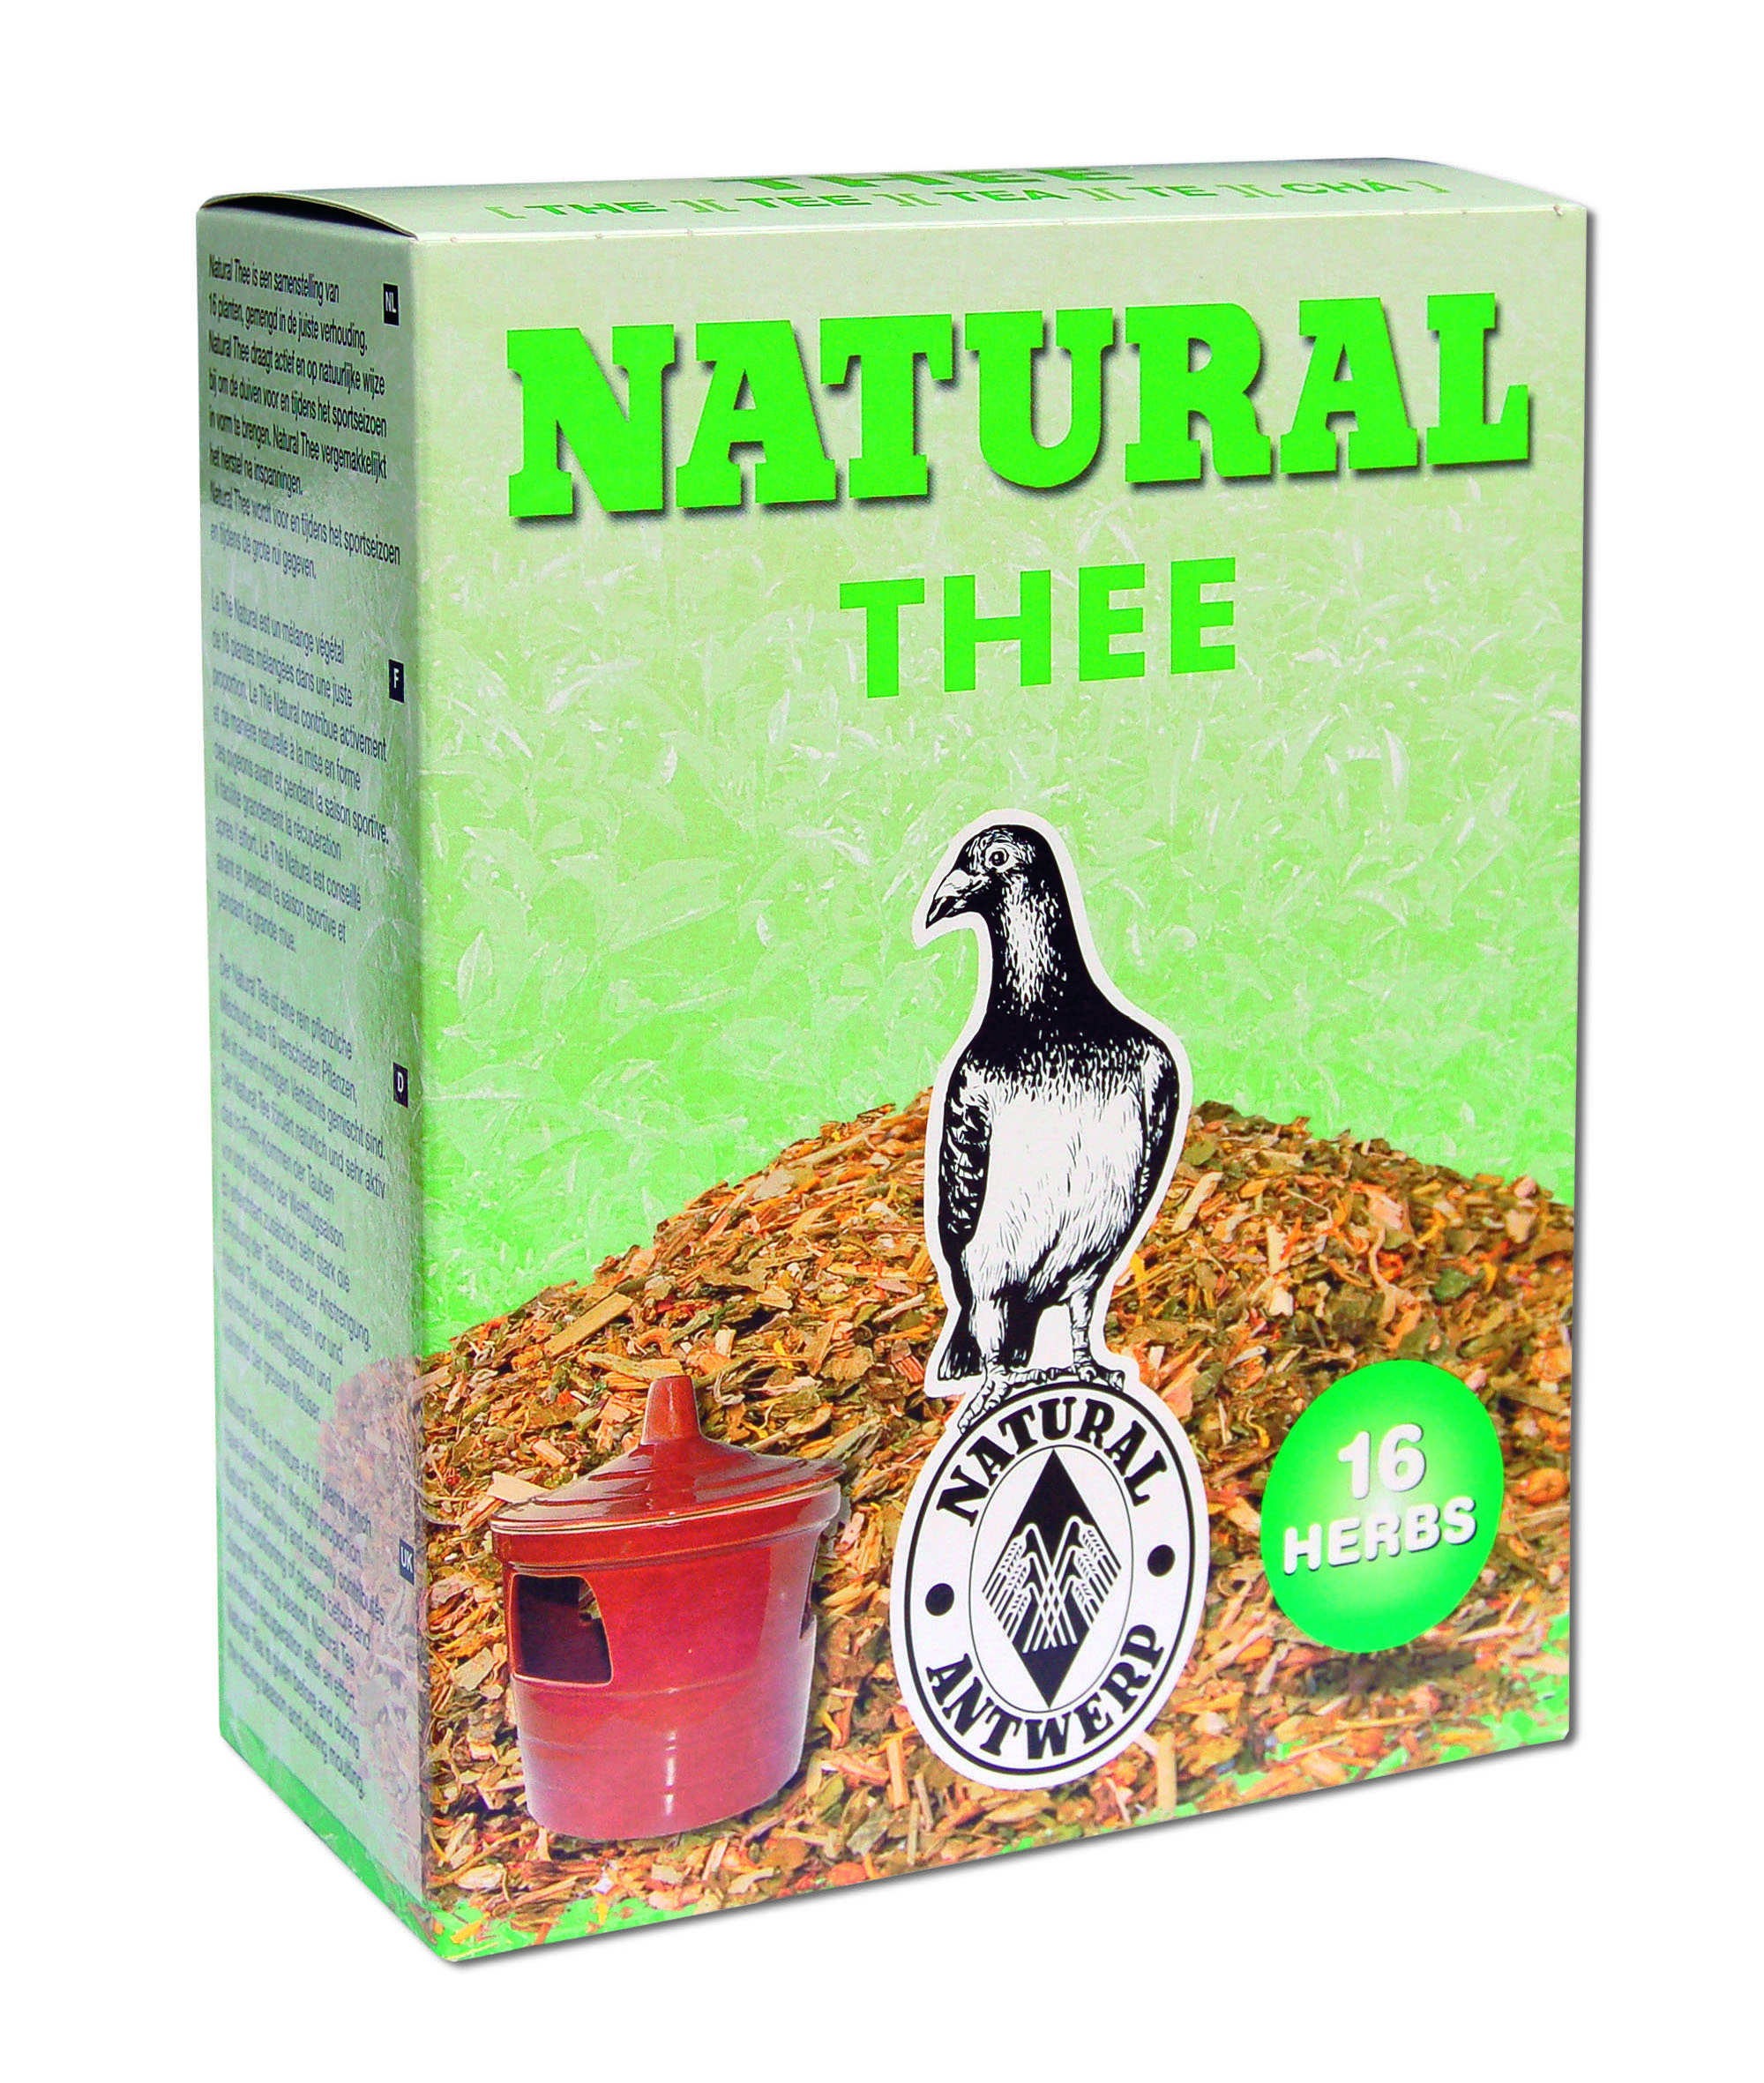 Natural tea - Product shot